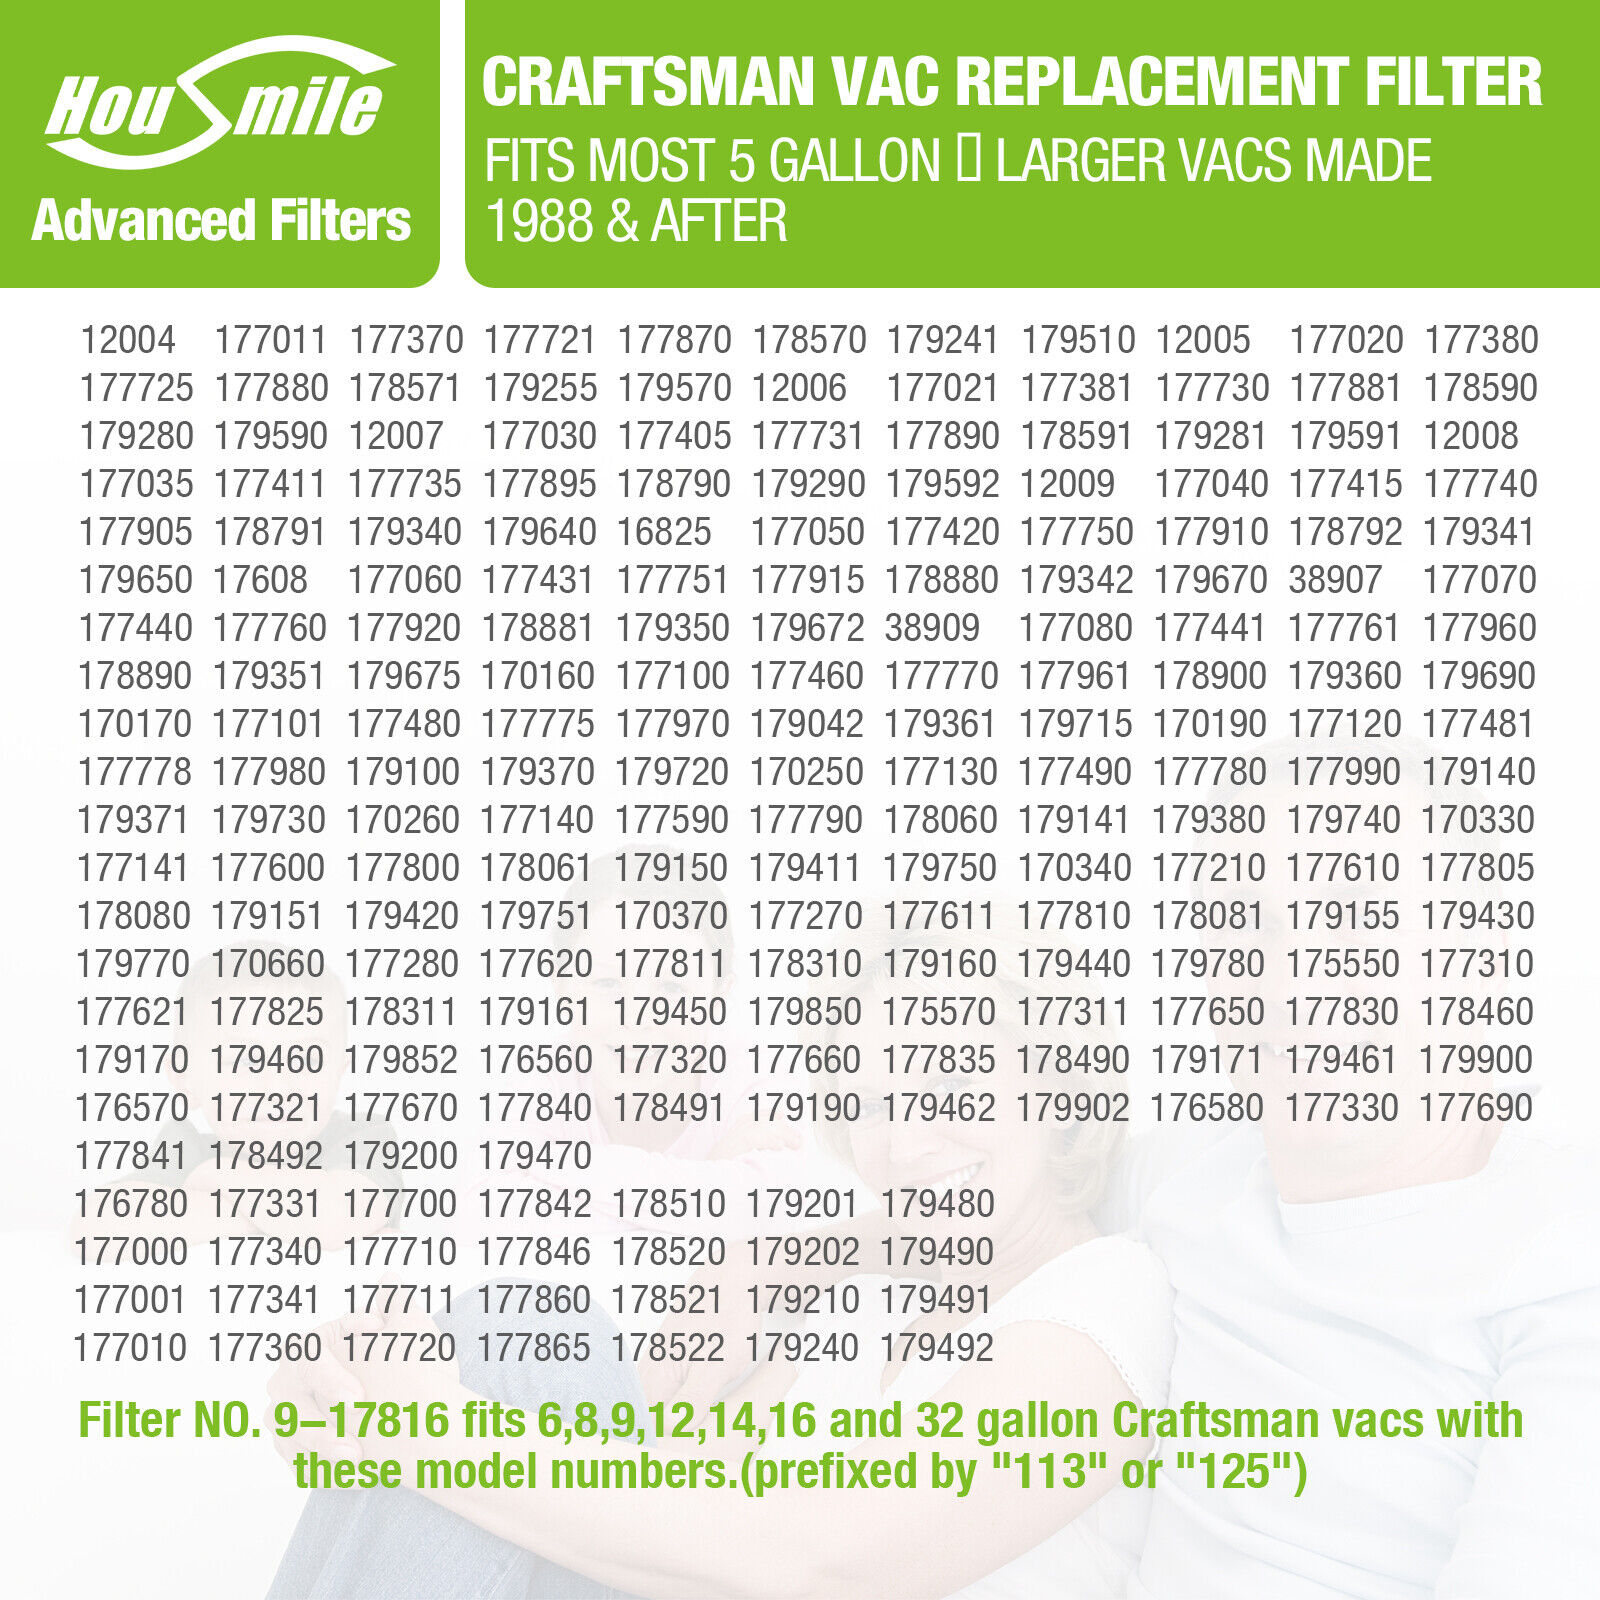 2xReplacement Cartridge Filter for Shop Vac Craftsman 9-17816 Wet Dry Air Filter Housmile - фотография #9